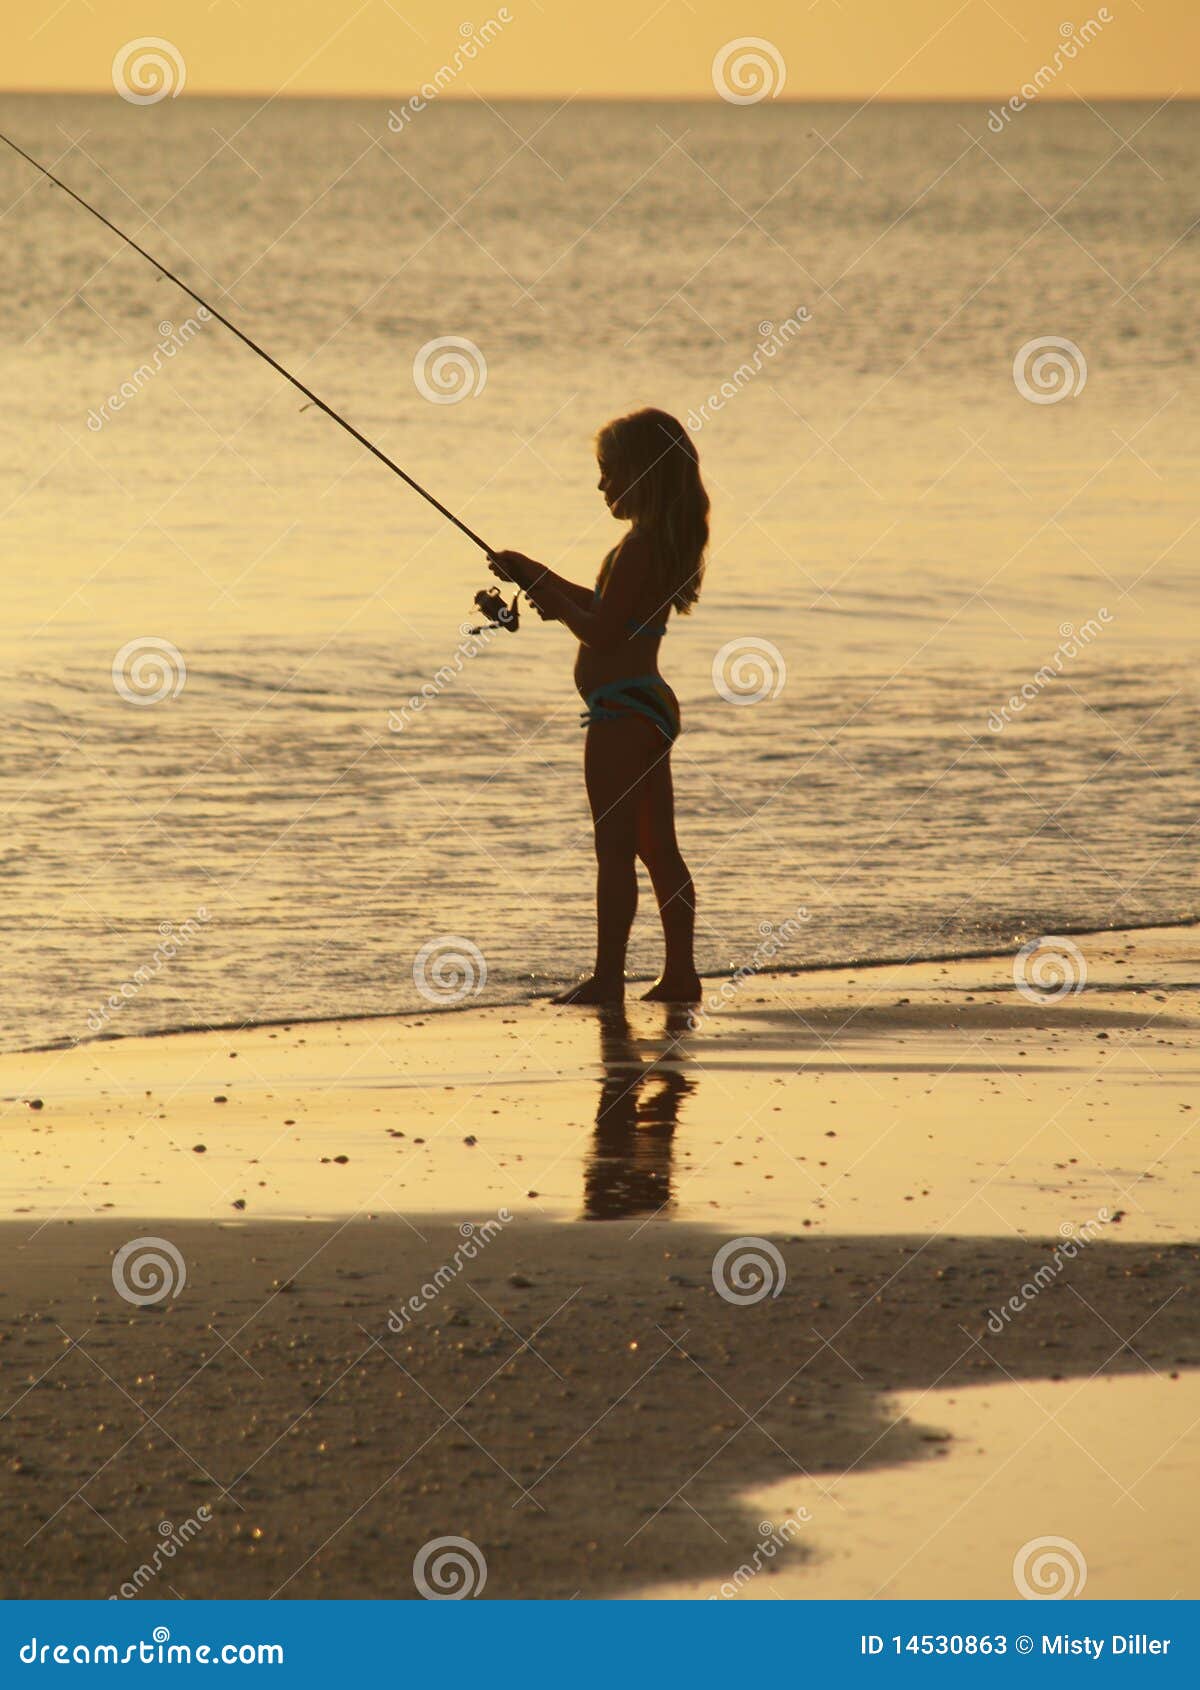 632 Girl Fishing Sunset Beach Stock Photos - Free & Royalty-Free